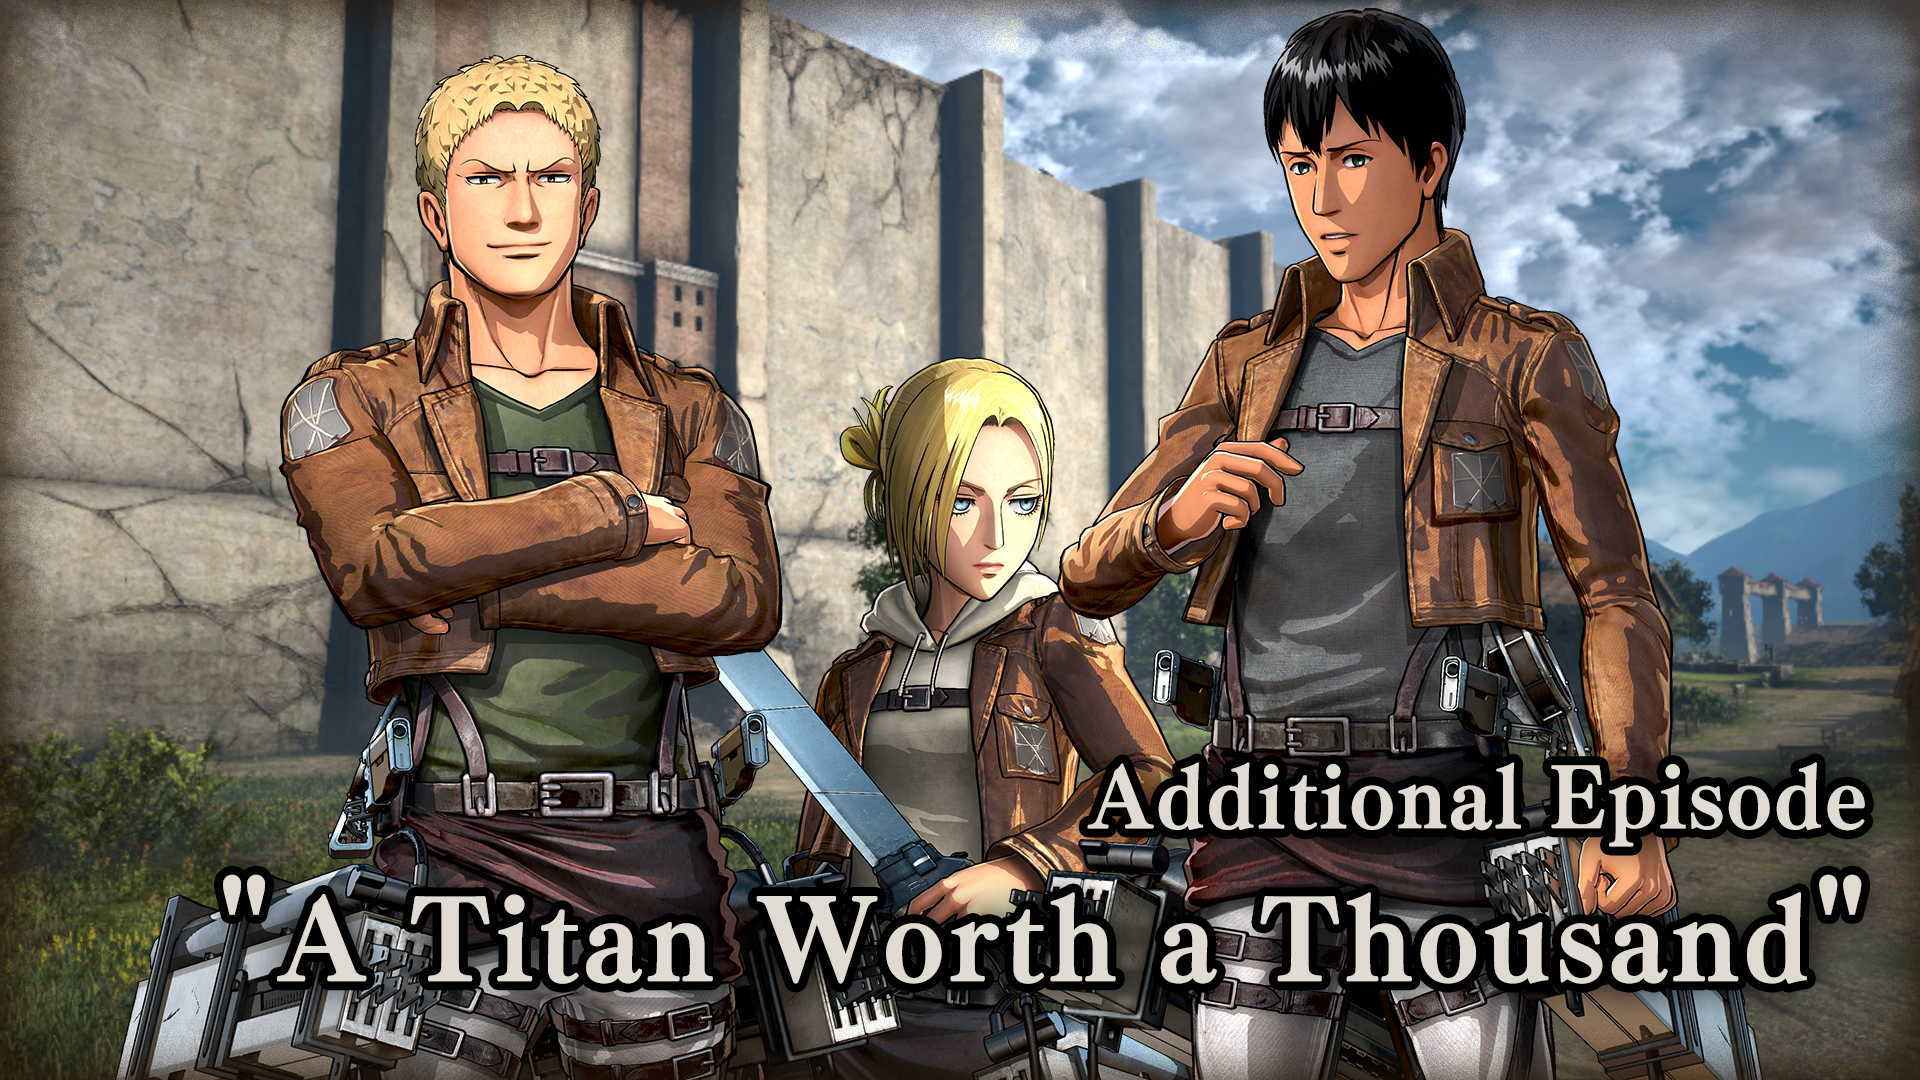 Additional Episode: "A Titan Worth a Thousand"